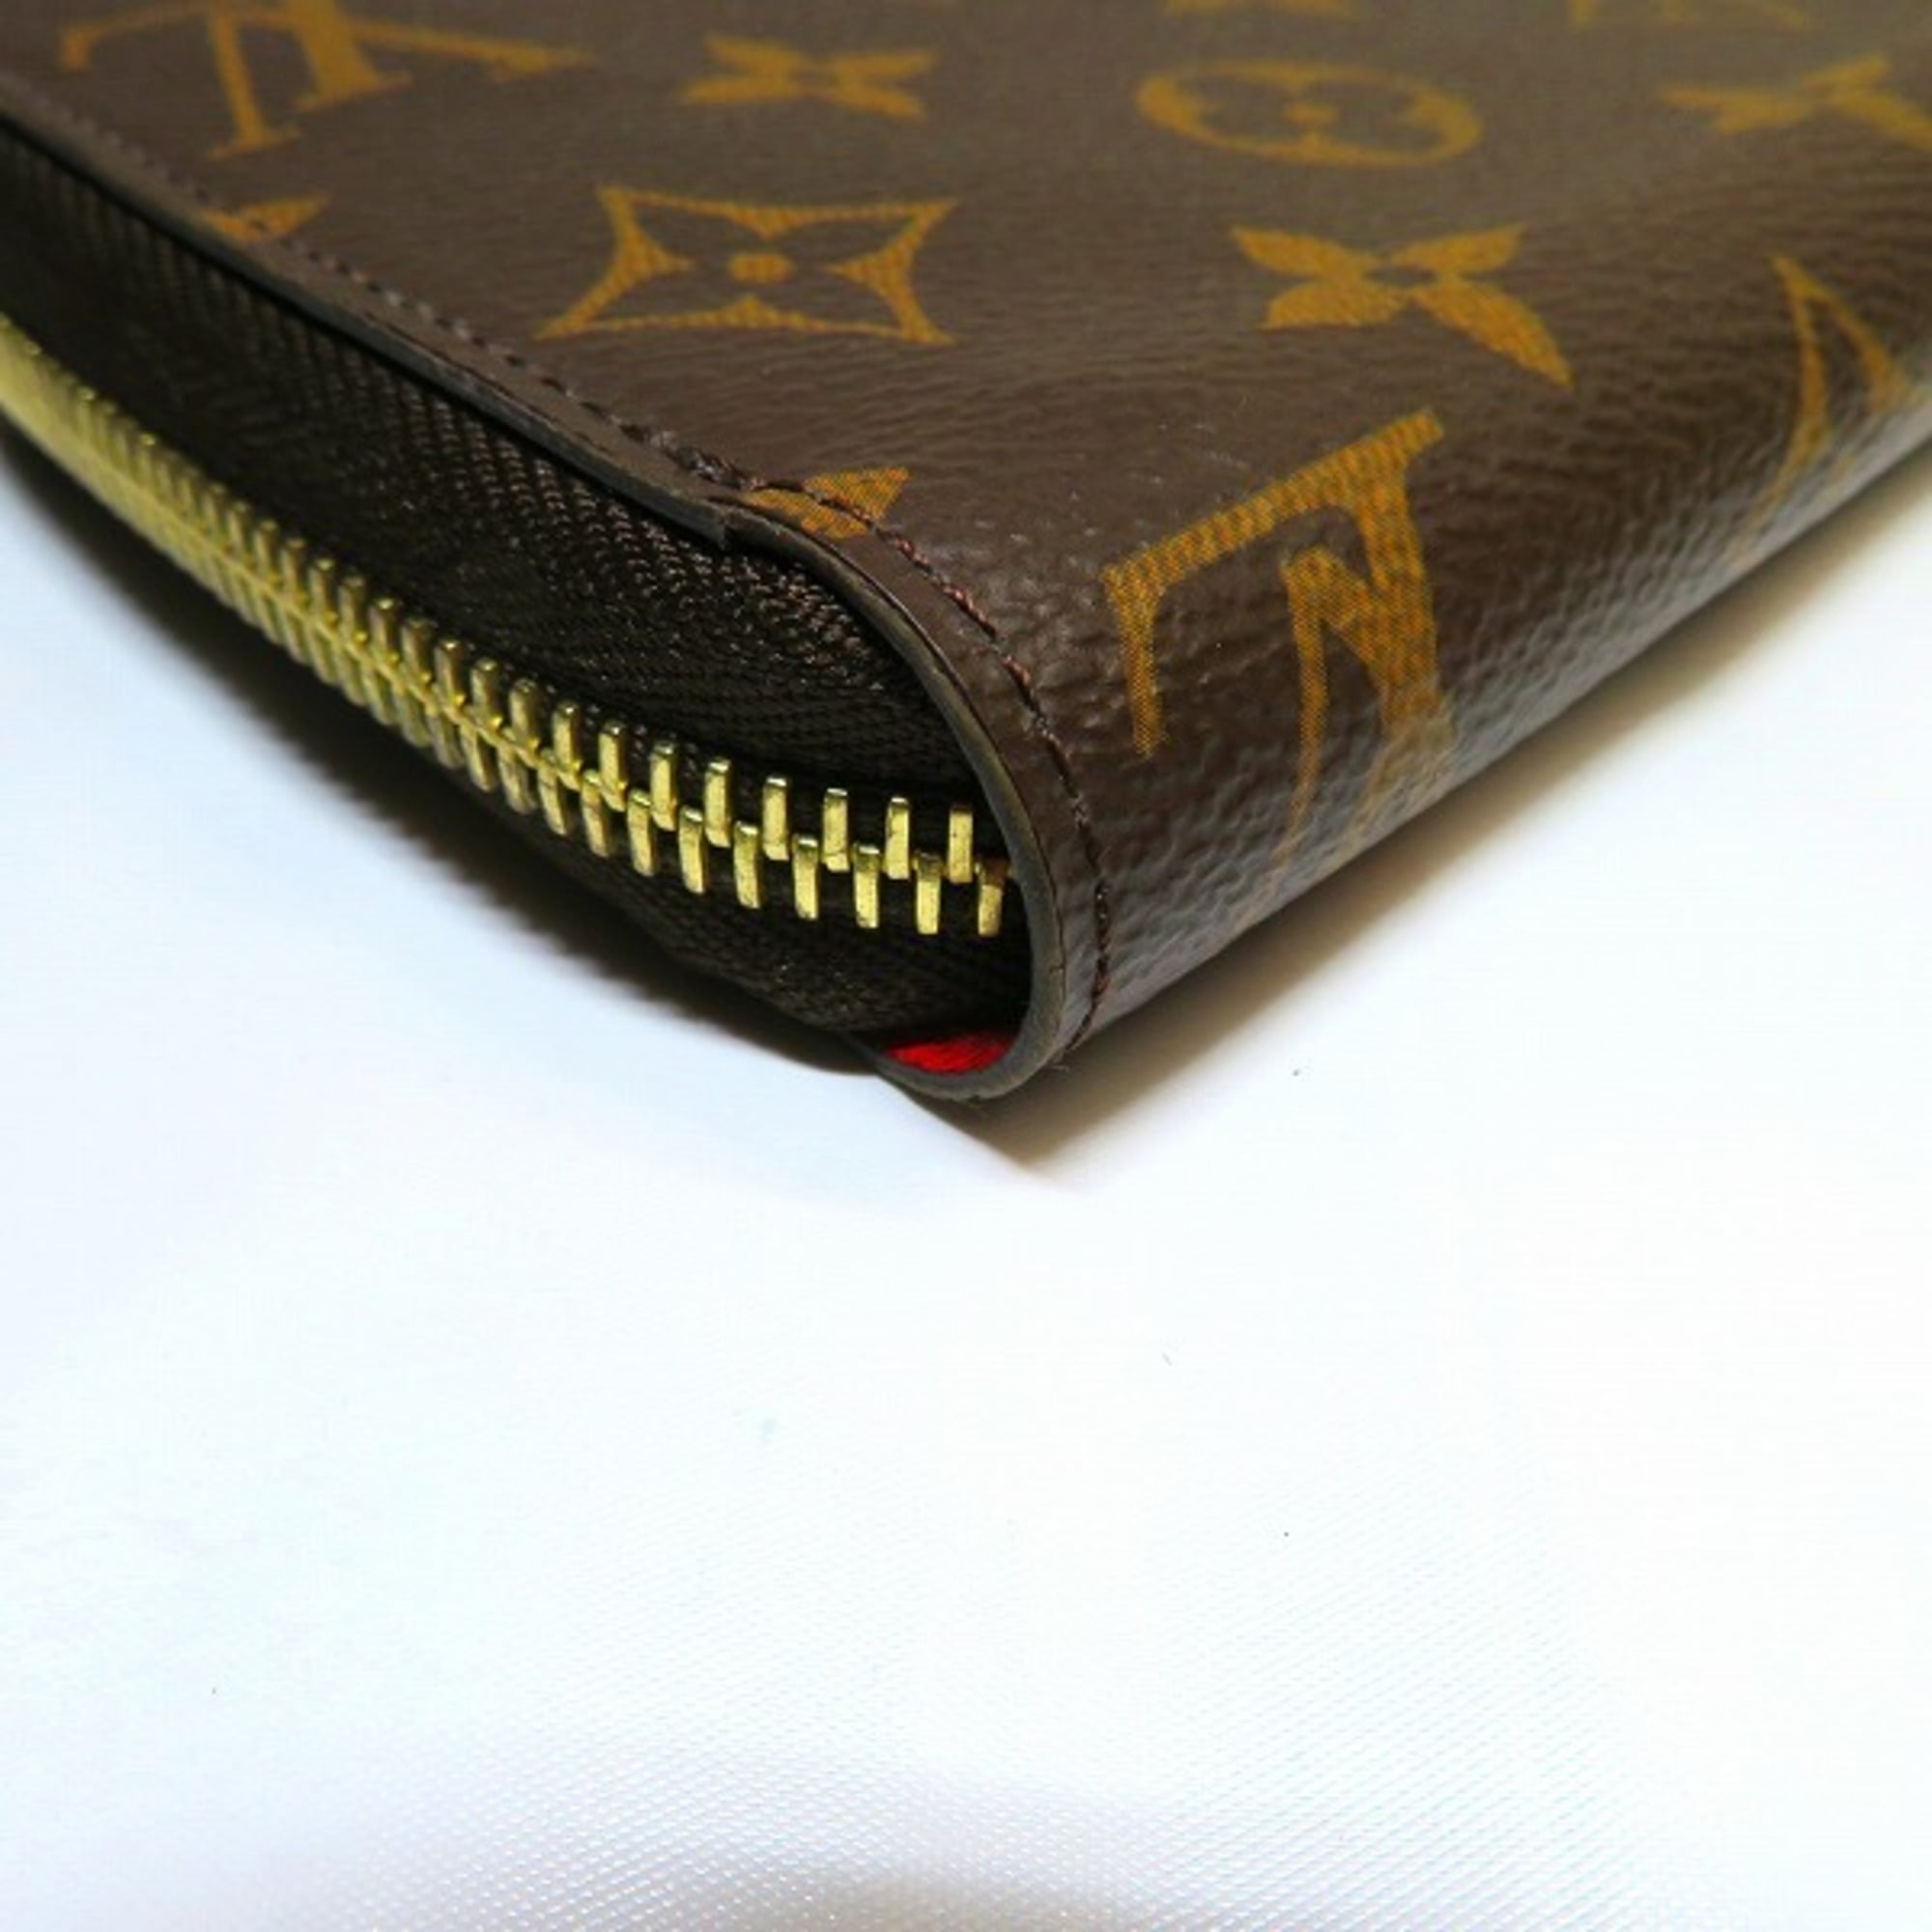 Louis Vuitton - Zippy Wallet - Monogram Canvas - Coquelicot - Women - Luxury